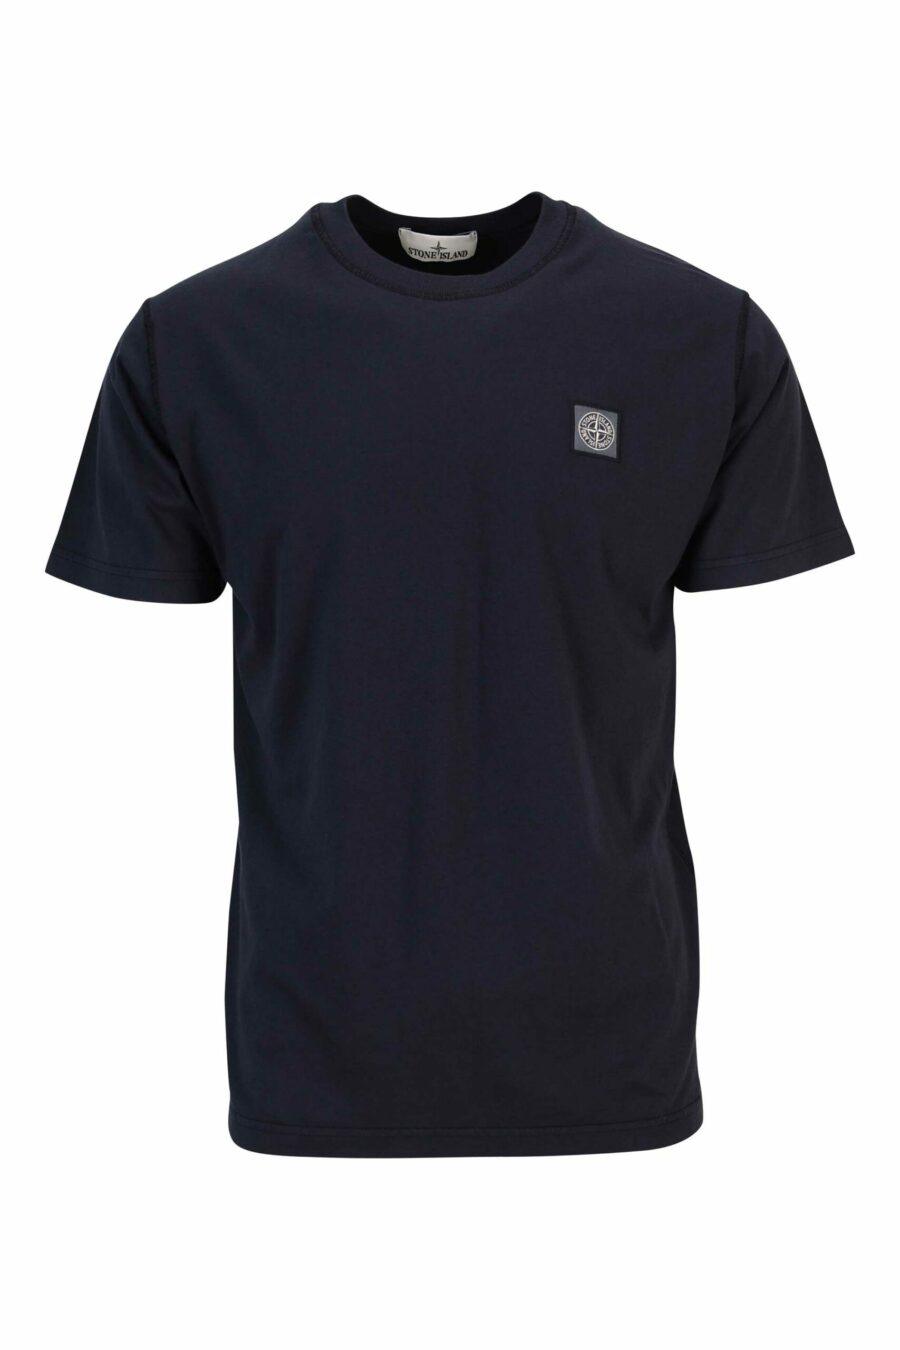 Dunkelblaues T-Shirt mit Kompass-Mini-Logo - 8052572905155 skaliert